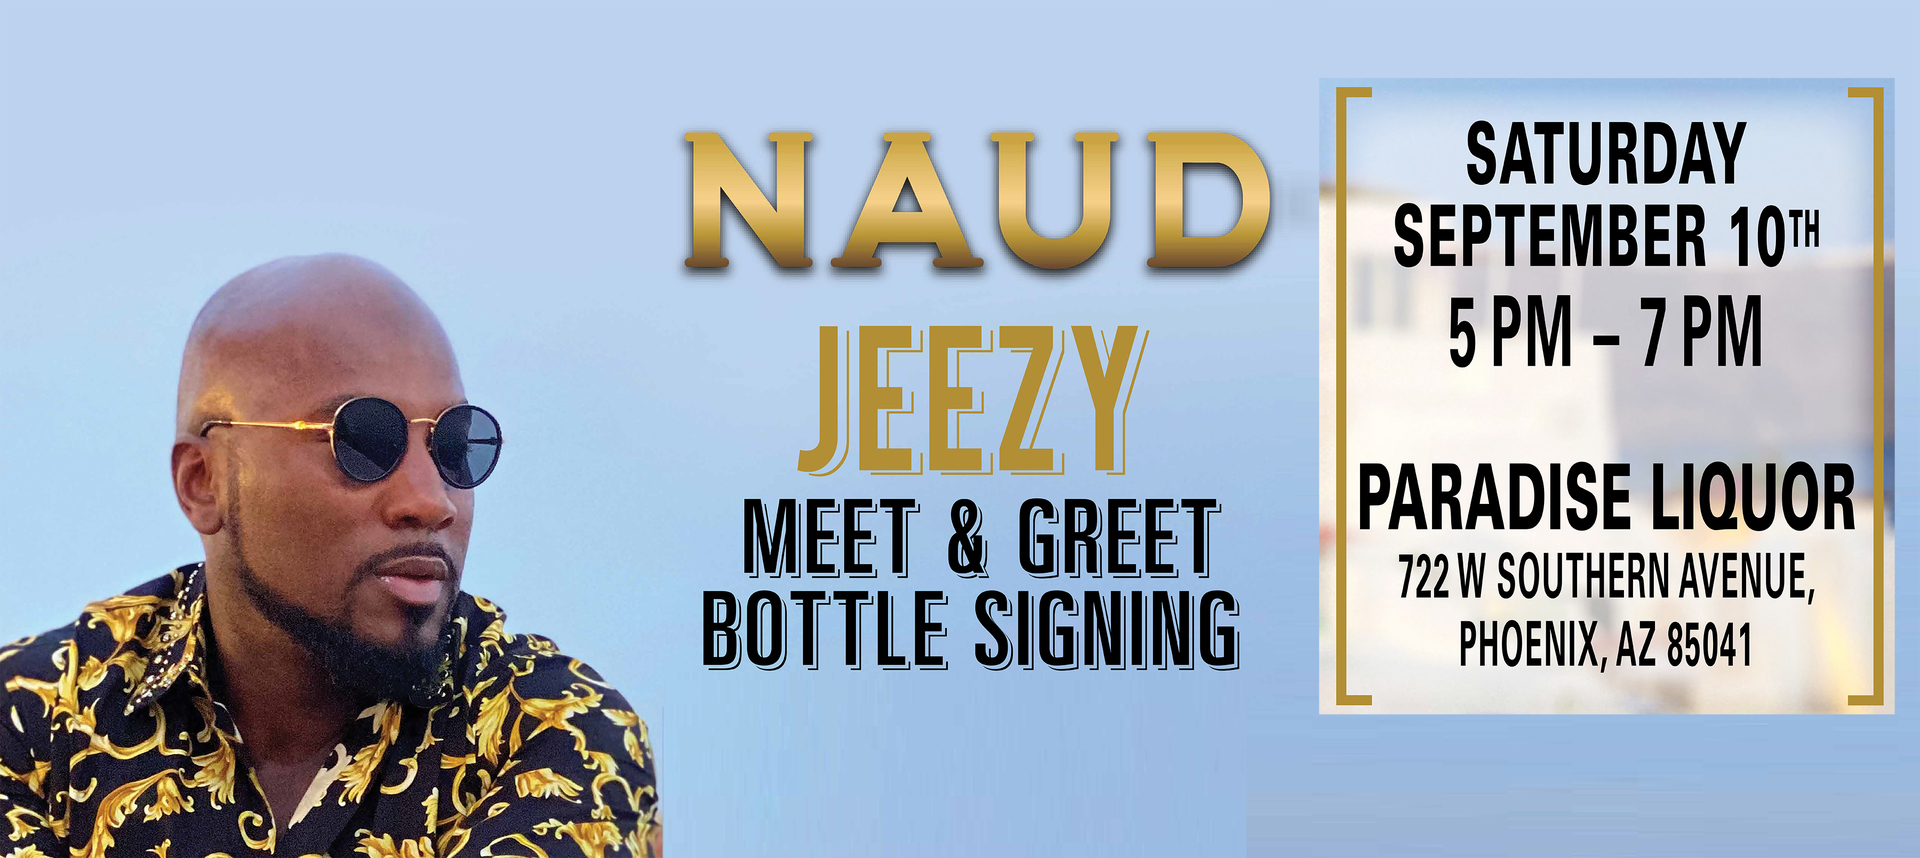 Young Jeezy x Naud Cognac Bottle Signing Meet & Greet, Phoenix, Arizona, United States